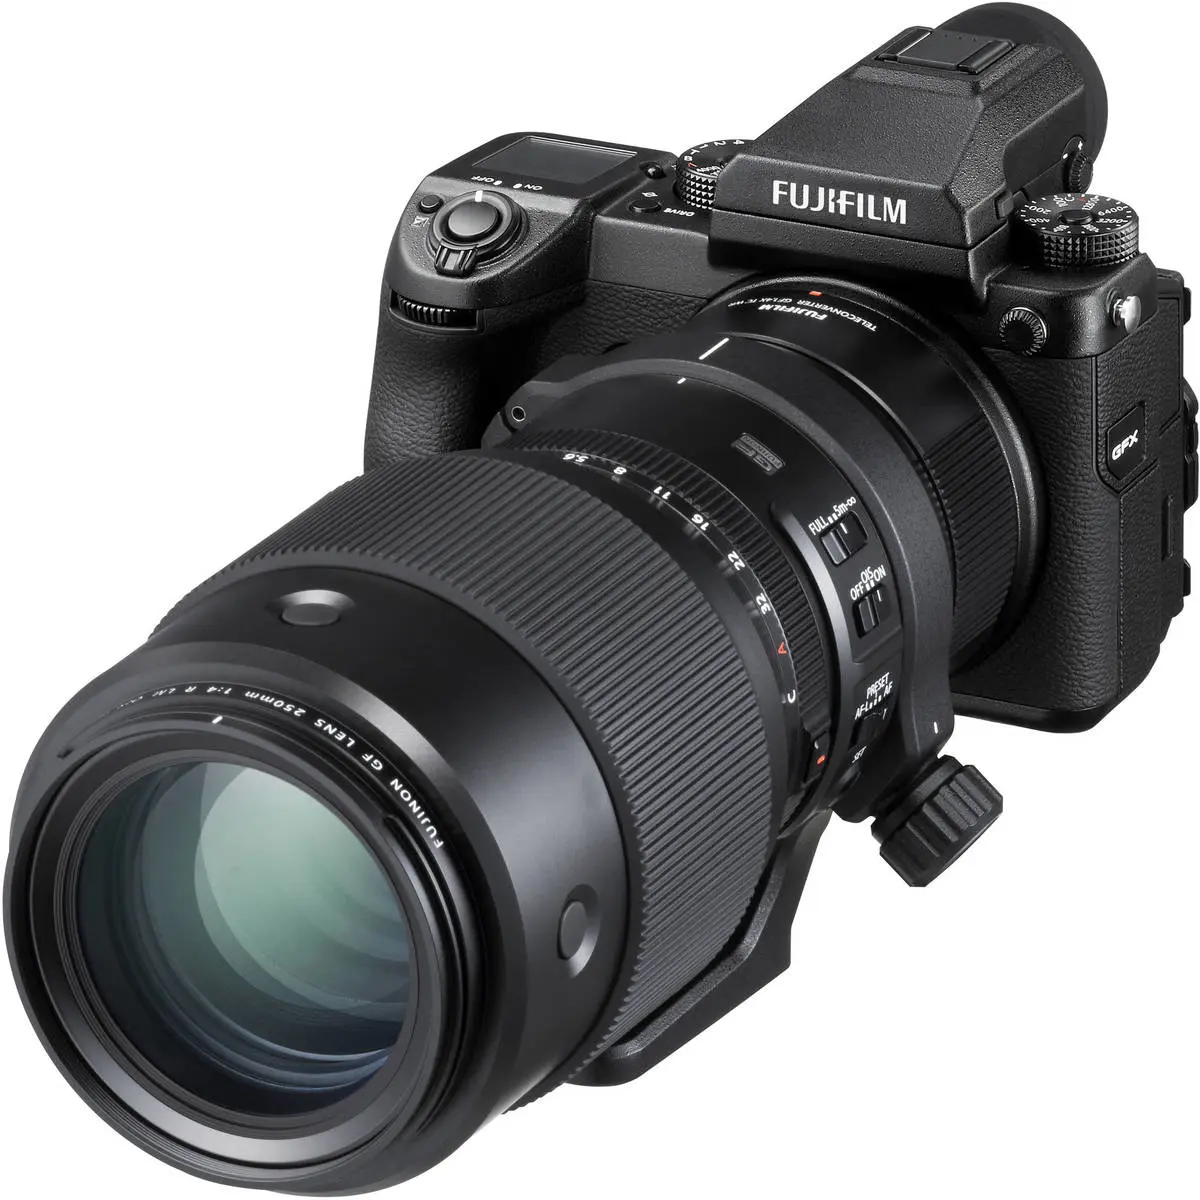 3. Fujifilm FUJINON GF 1.4X TC WR Teleconverter Lens